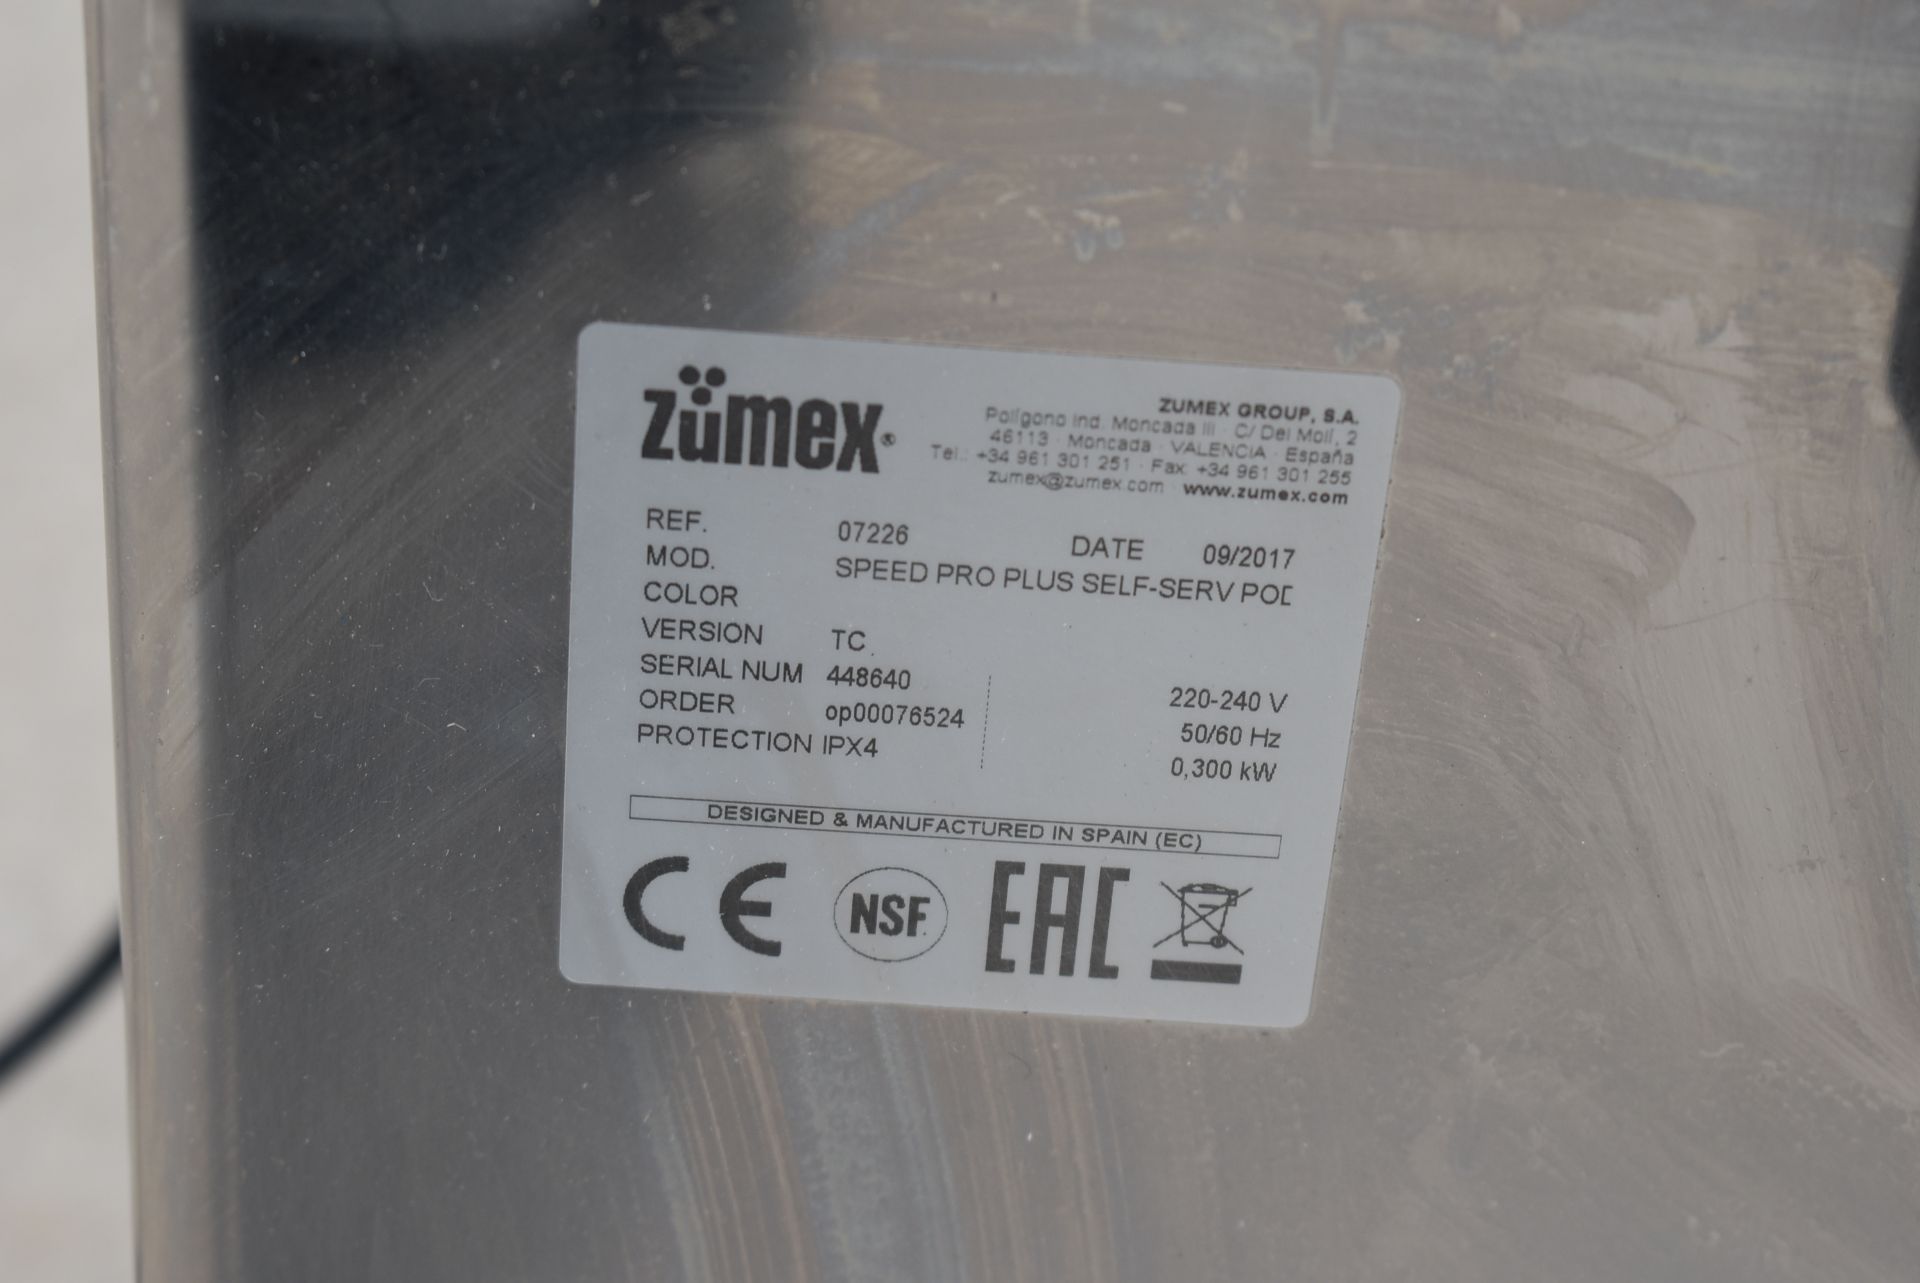 1 x Zumex Speed S +Plus Self-Service Podium Commercial Citrus Juicer - Manufactured in 2018 - - Image 5 of 6